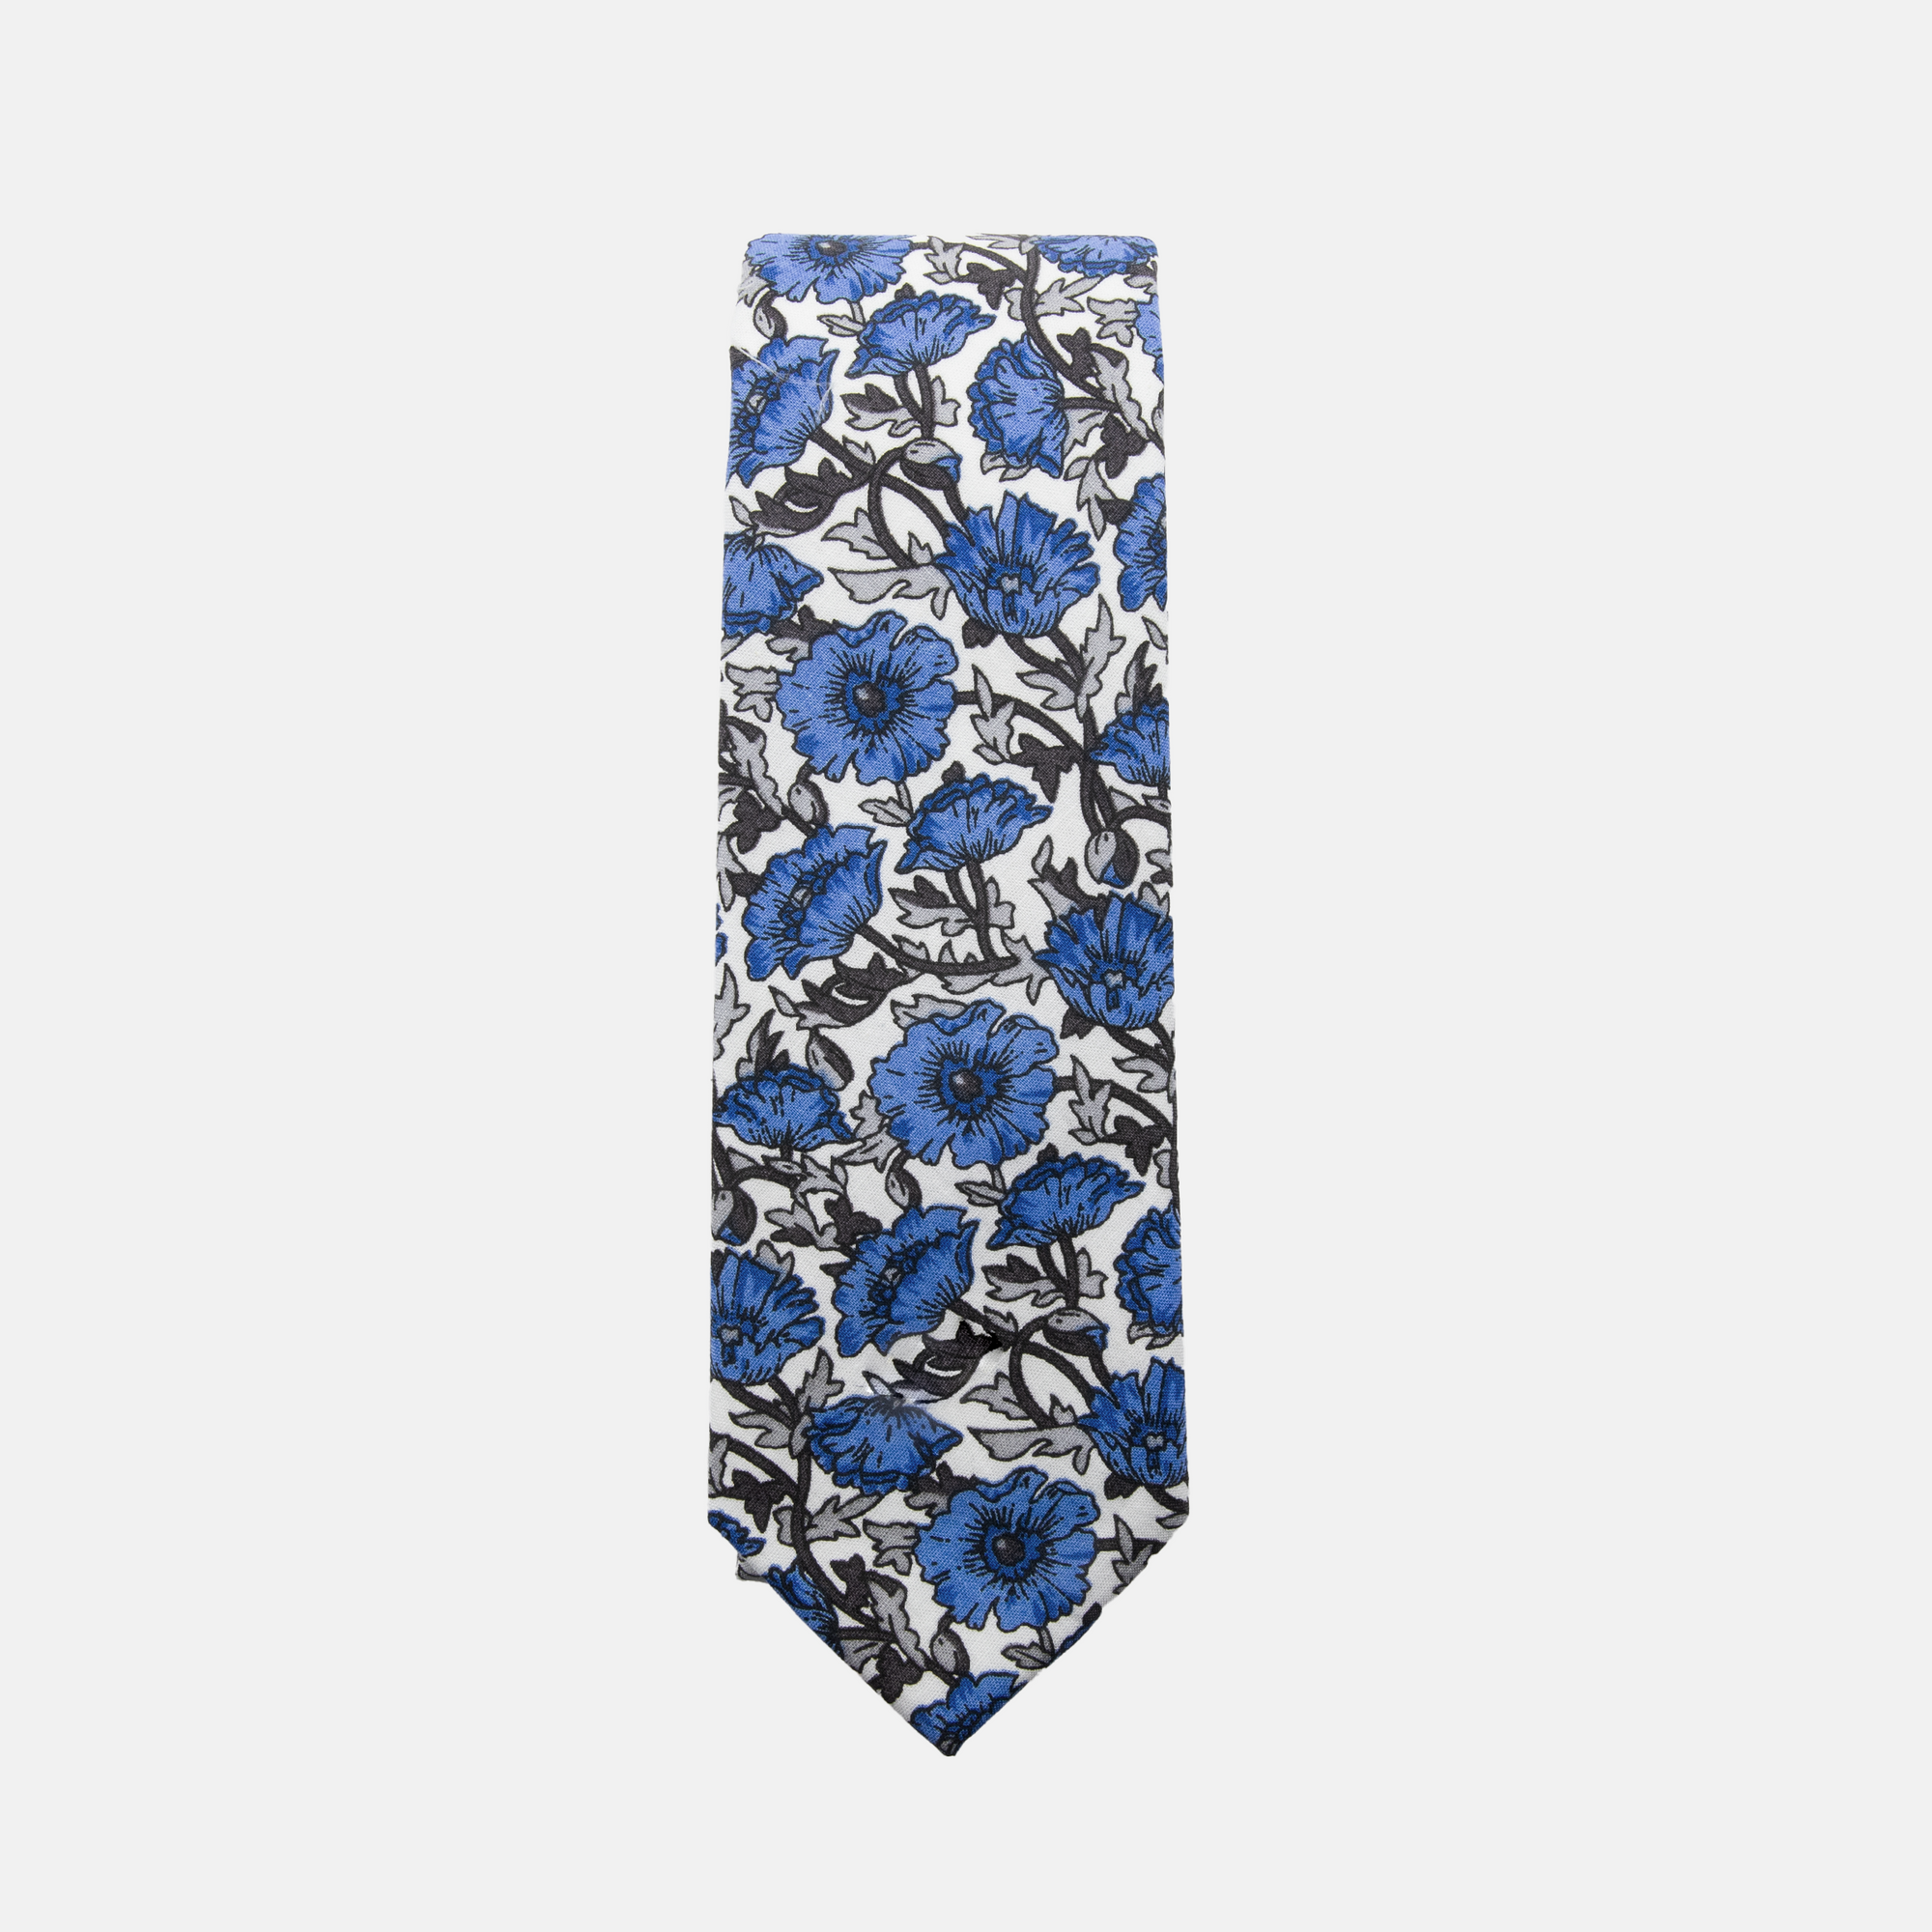 BOWEN - Men's Tie